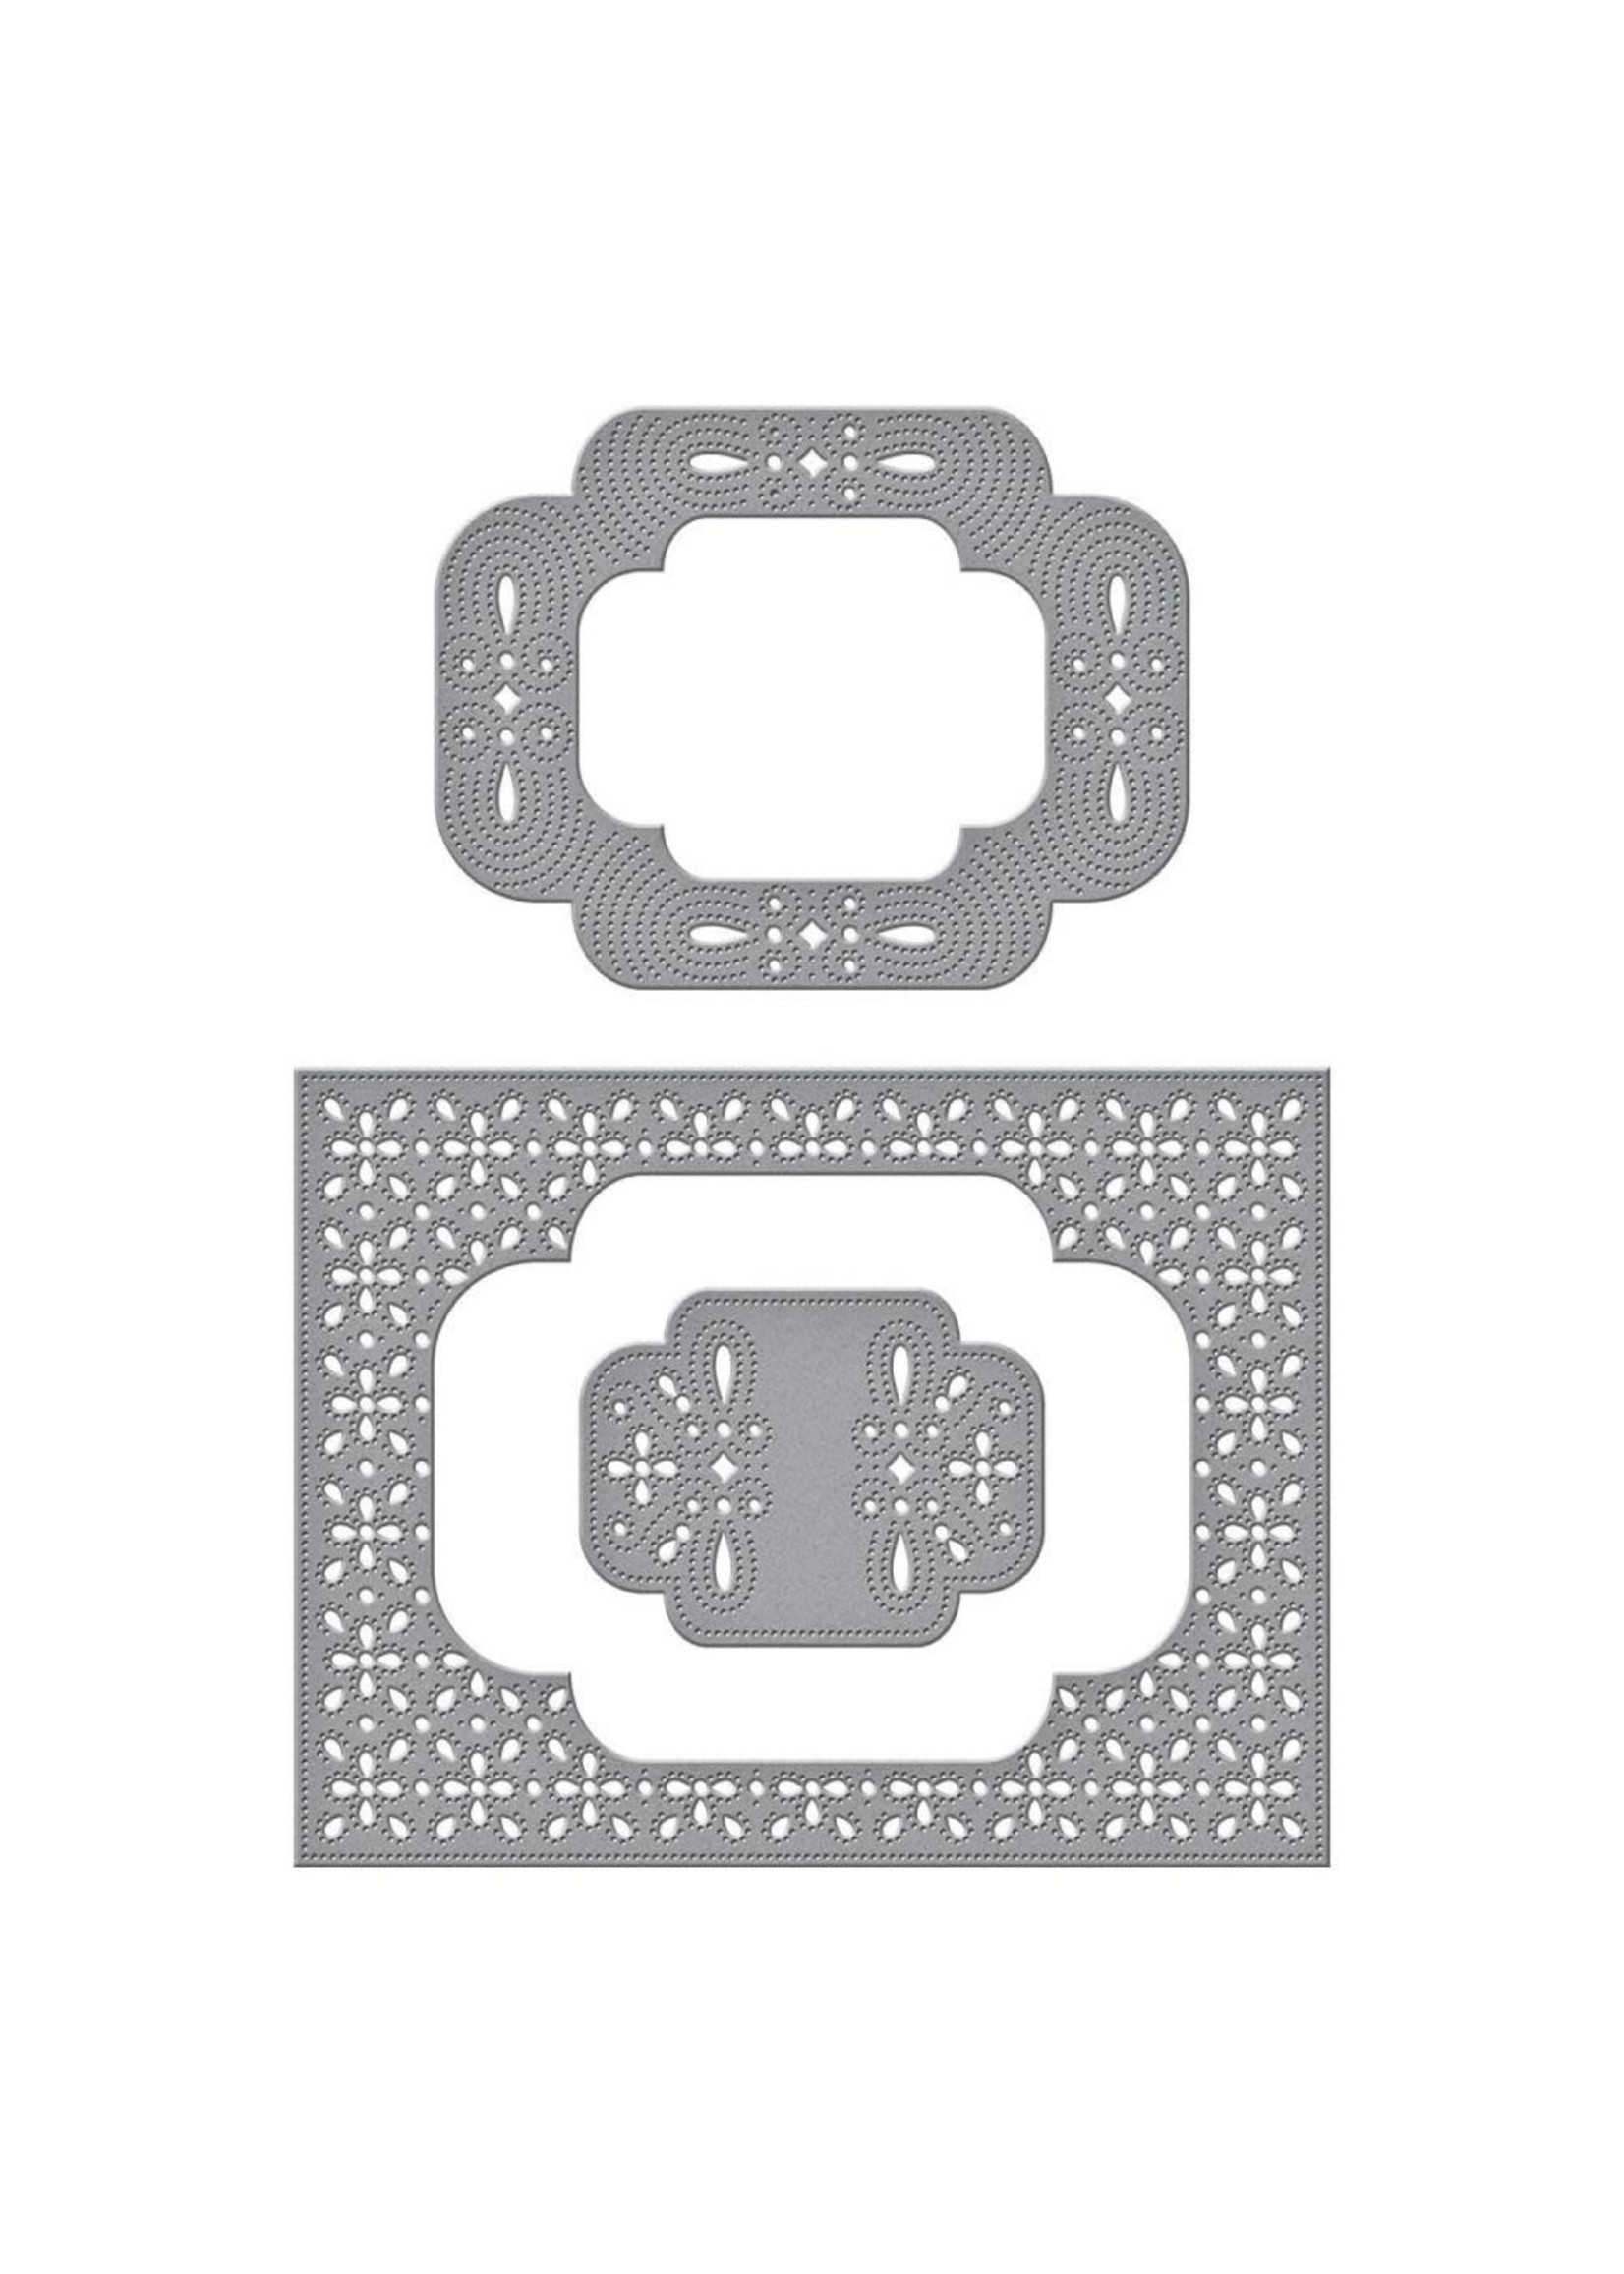 SPELLBINDERS PAPERCRAFTS, INC Scrolled Punch & Pierce Plate-Four Petal